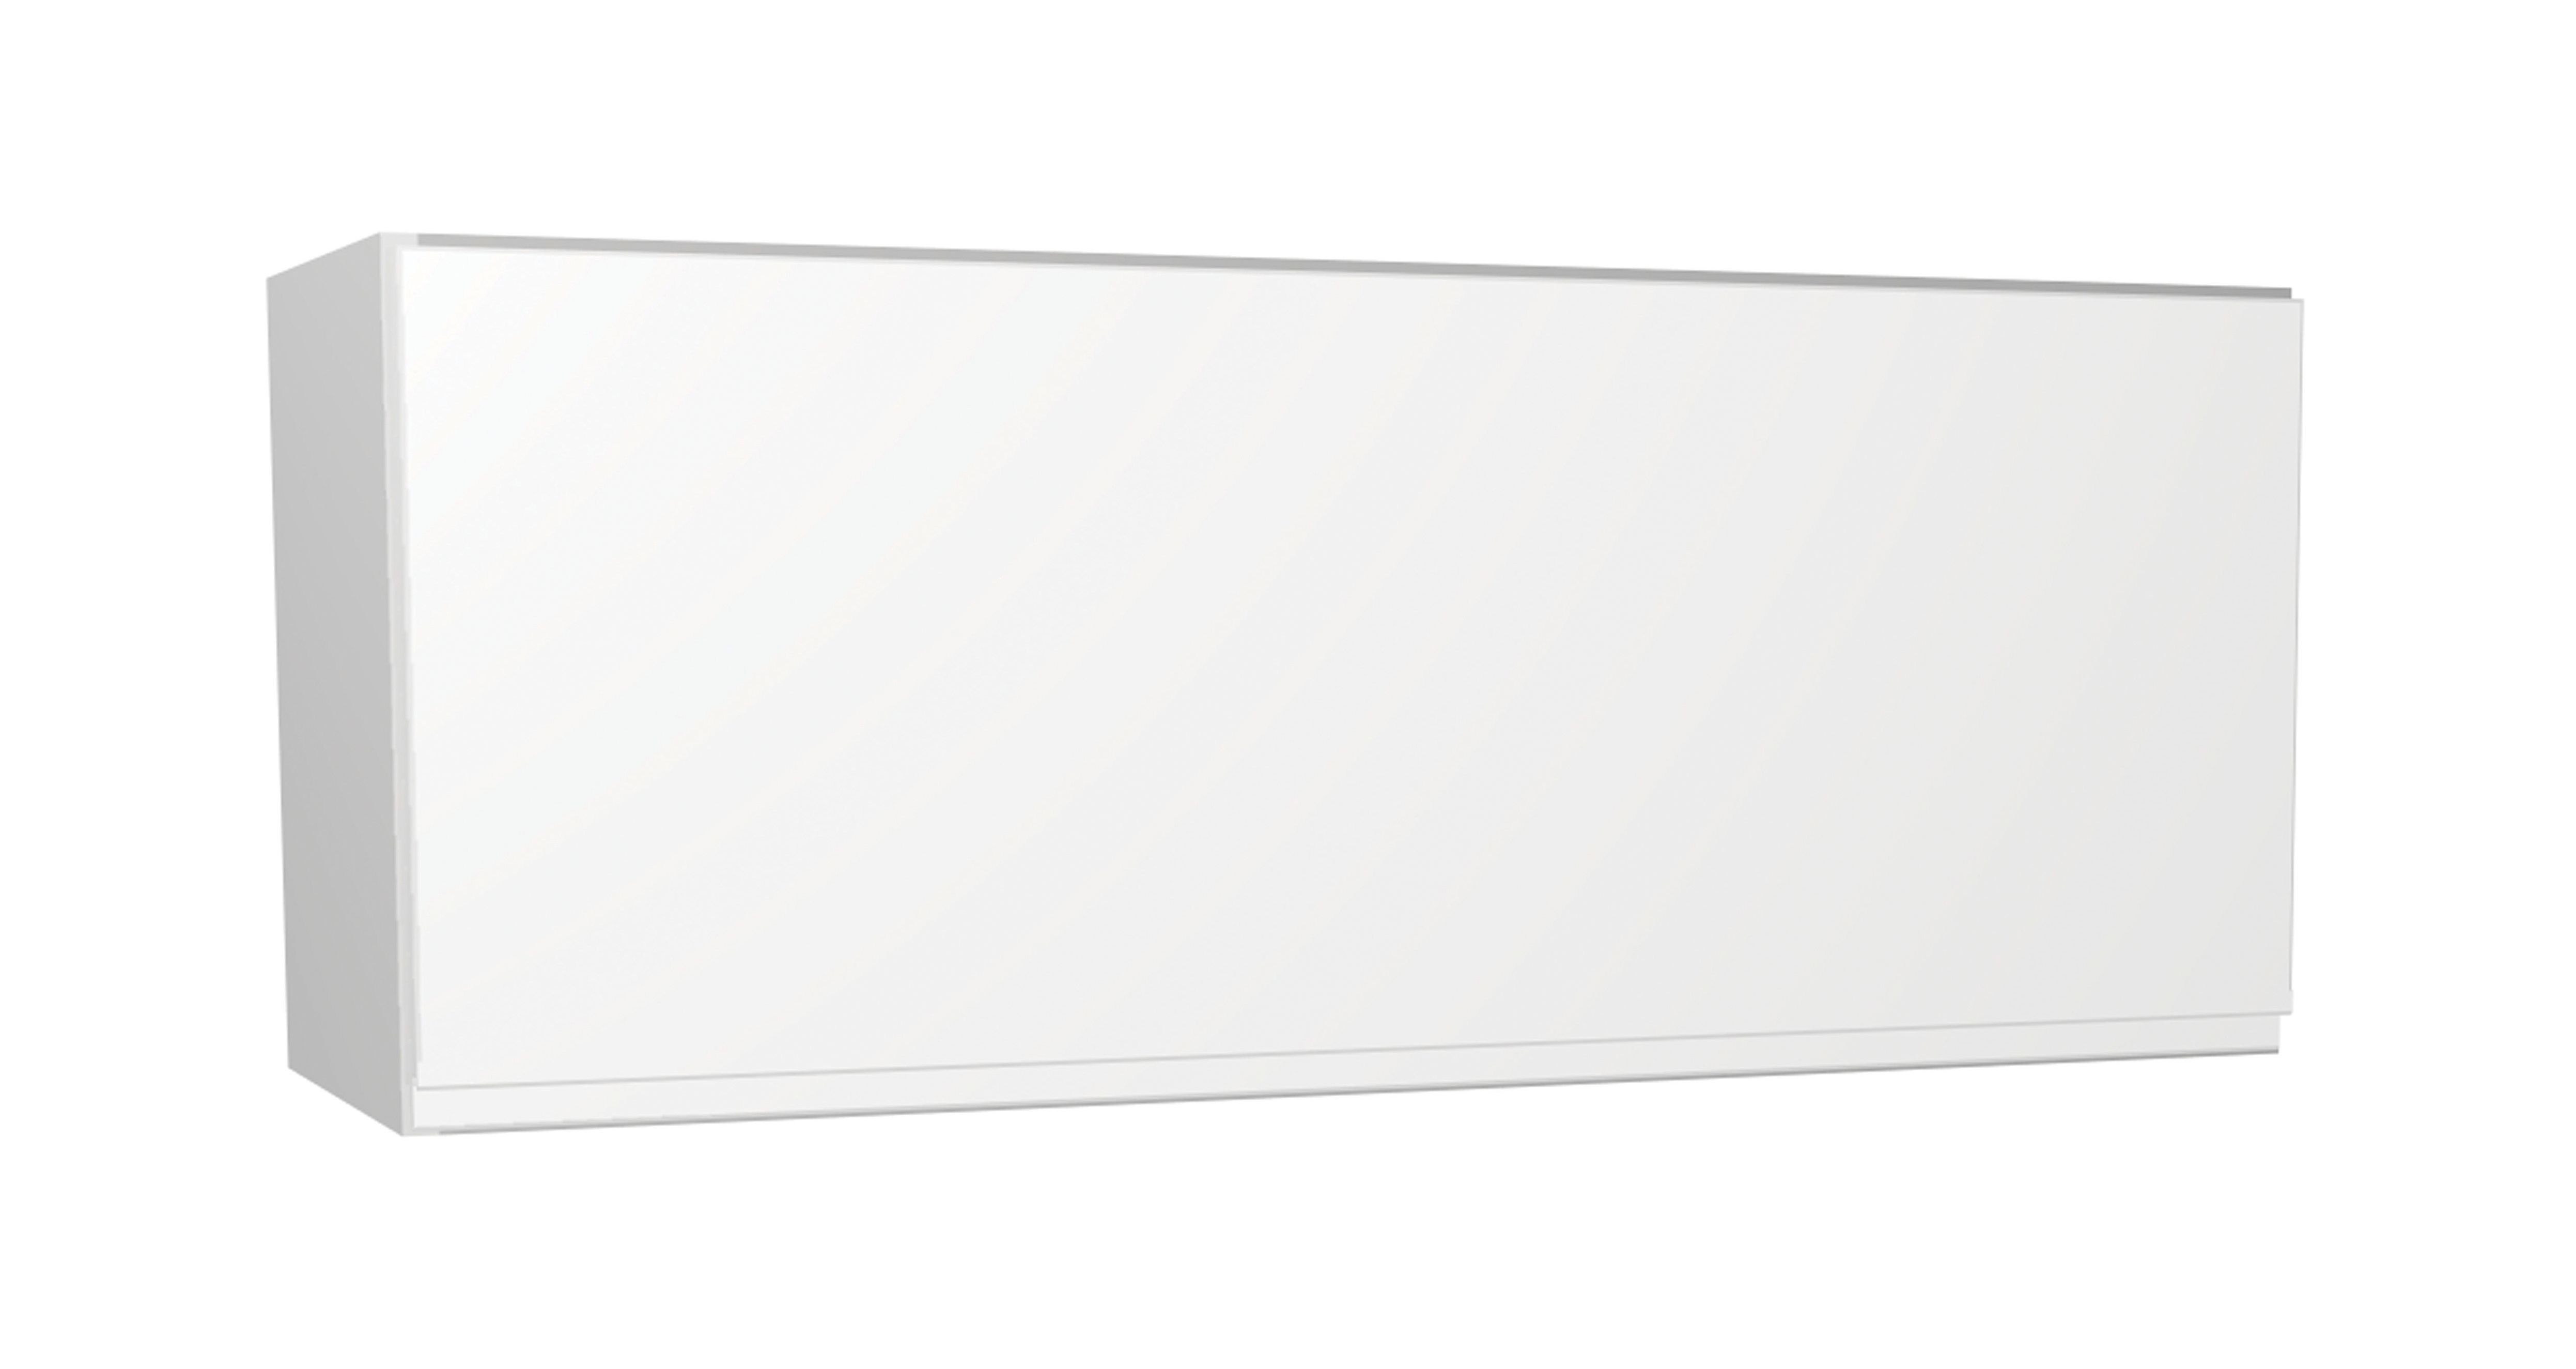 Image of Wickes Madison White Gloss Handleless Narrow Wall Unit - 900mm